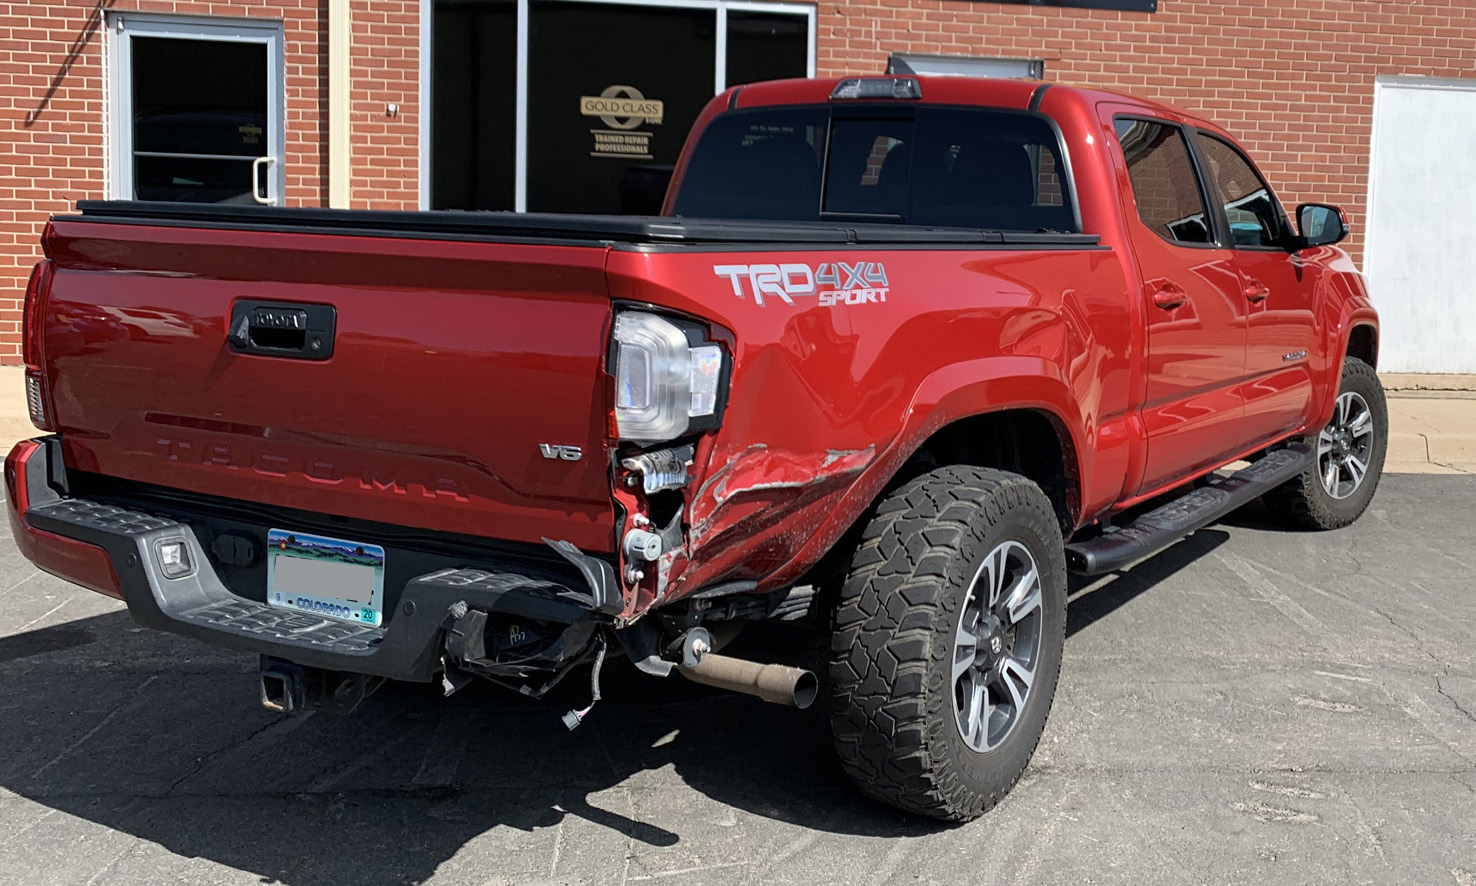 Toyota collision damage